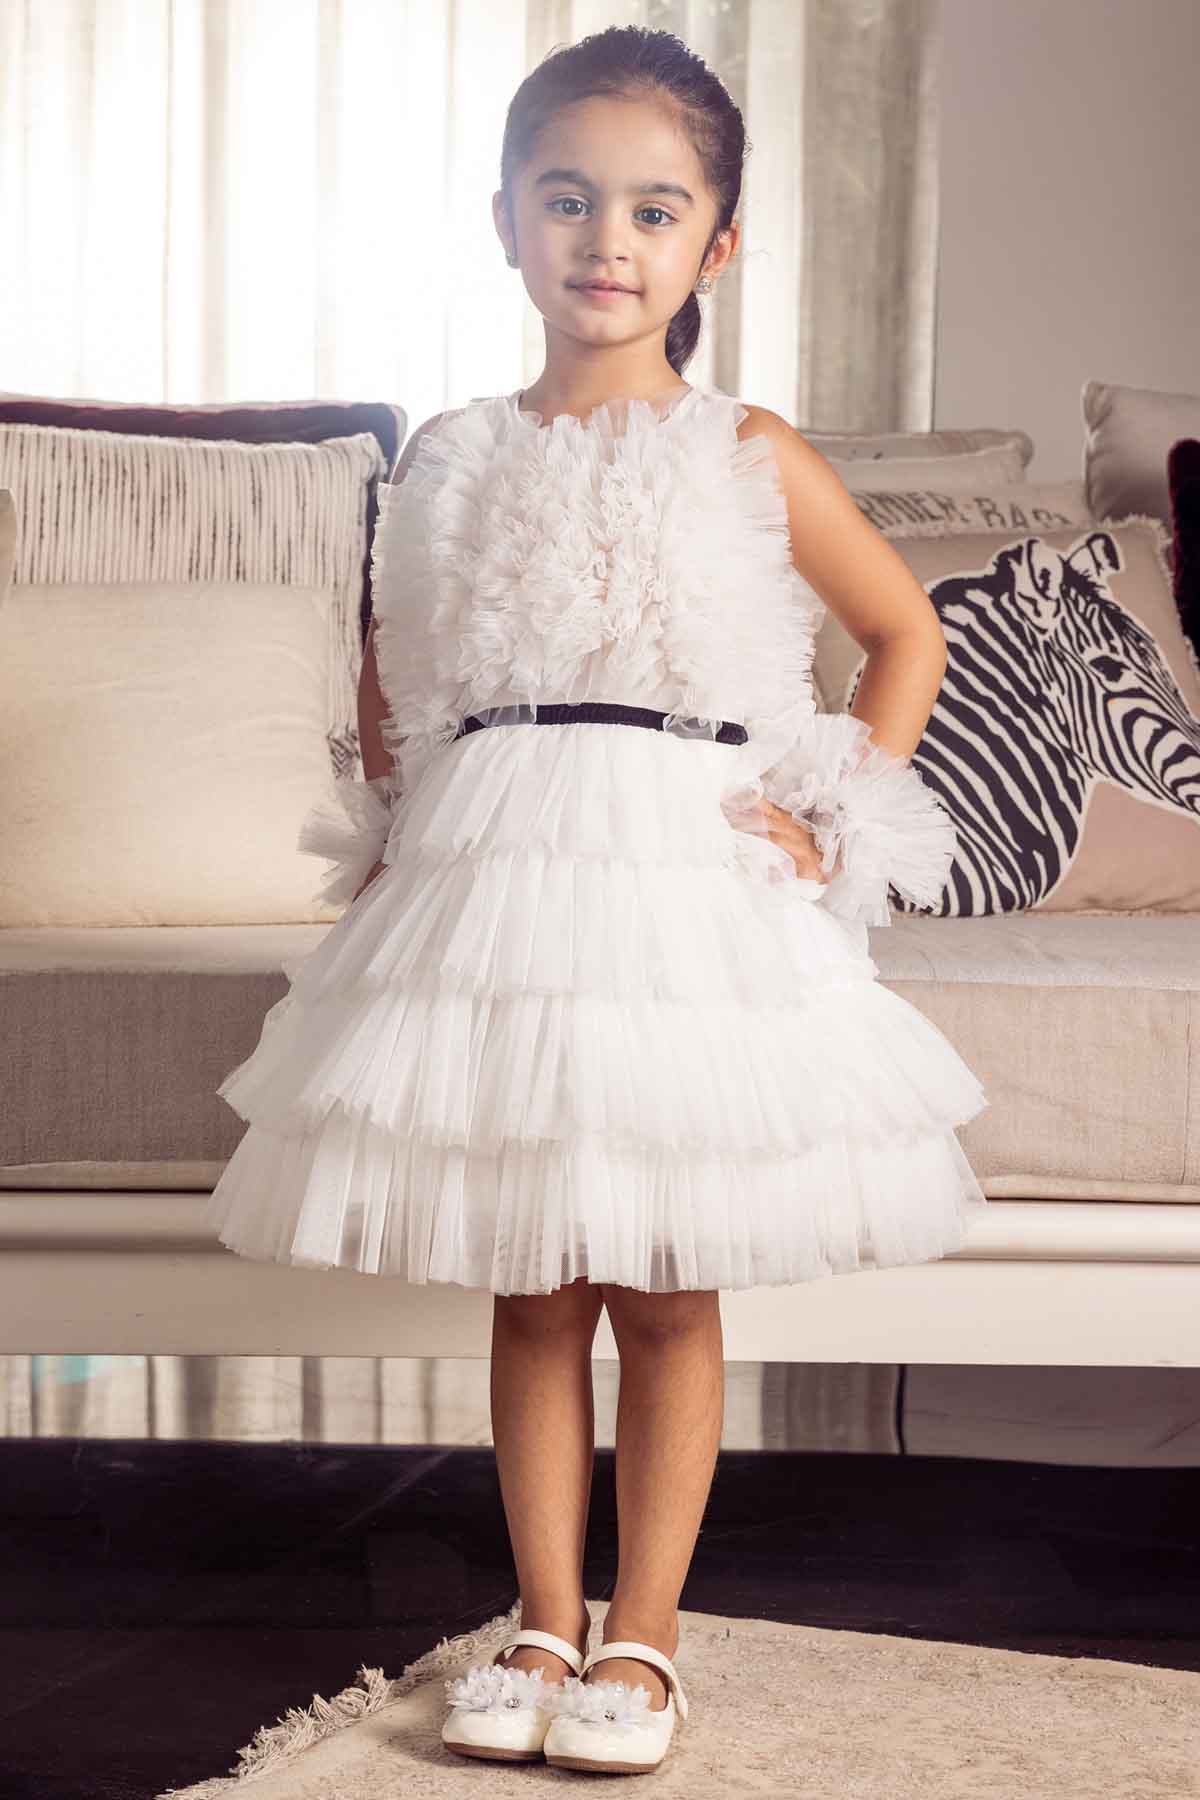 Designer Net A-Line Sleeveless Dress For Girls available at ScrollnShops